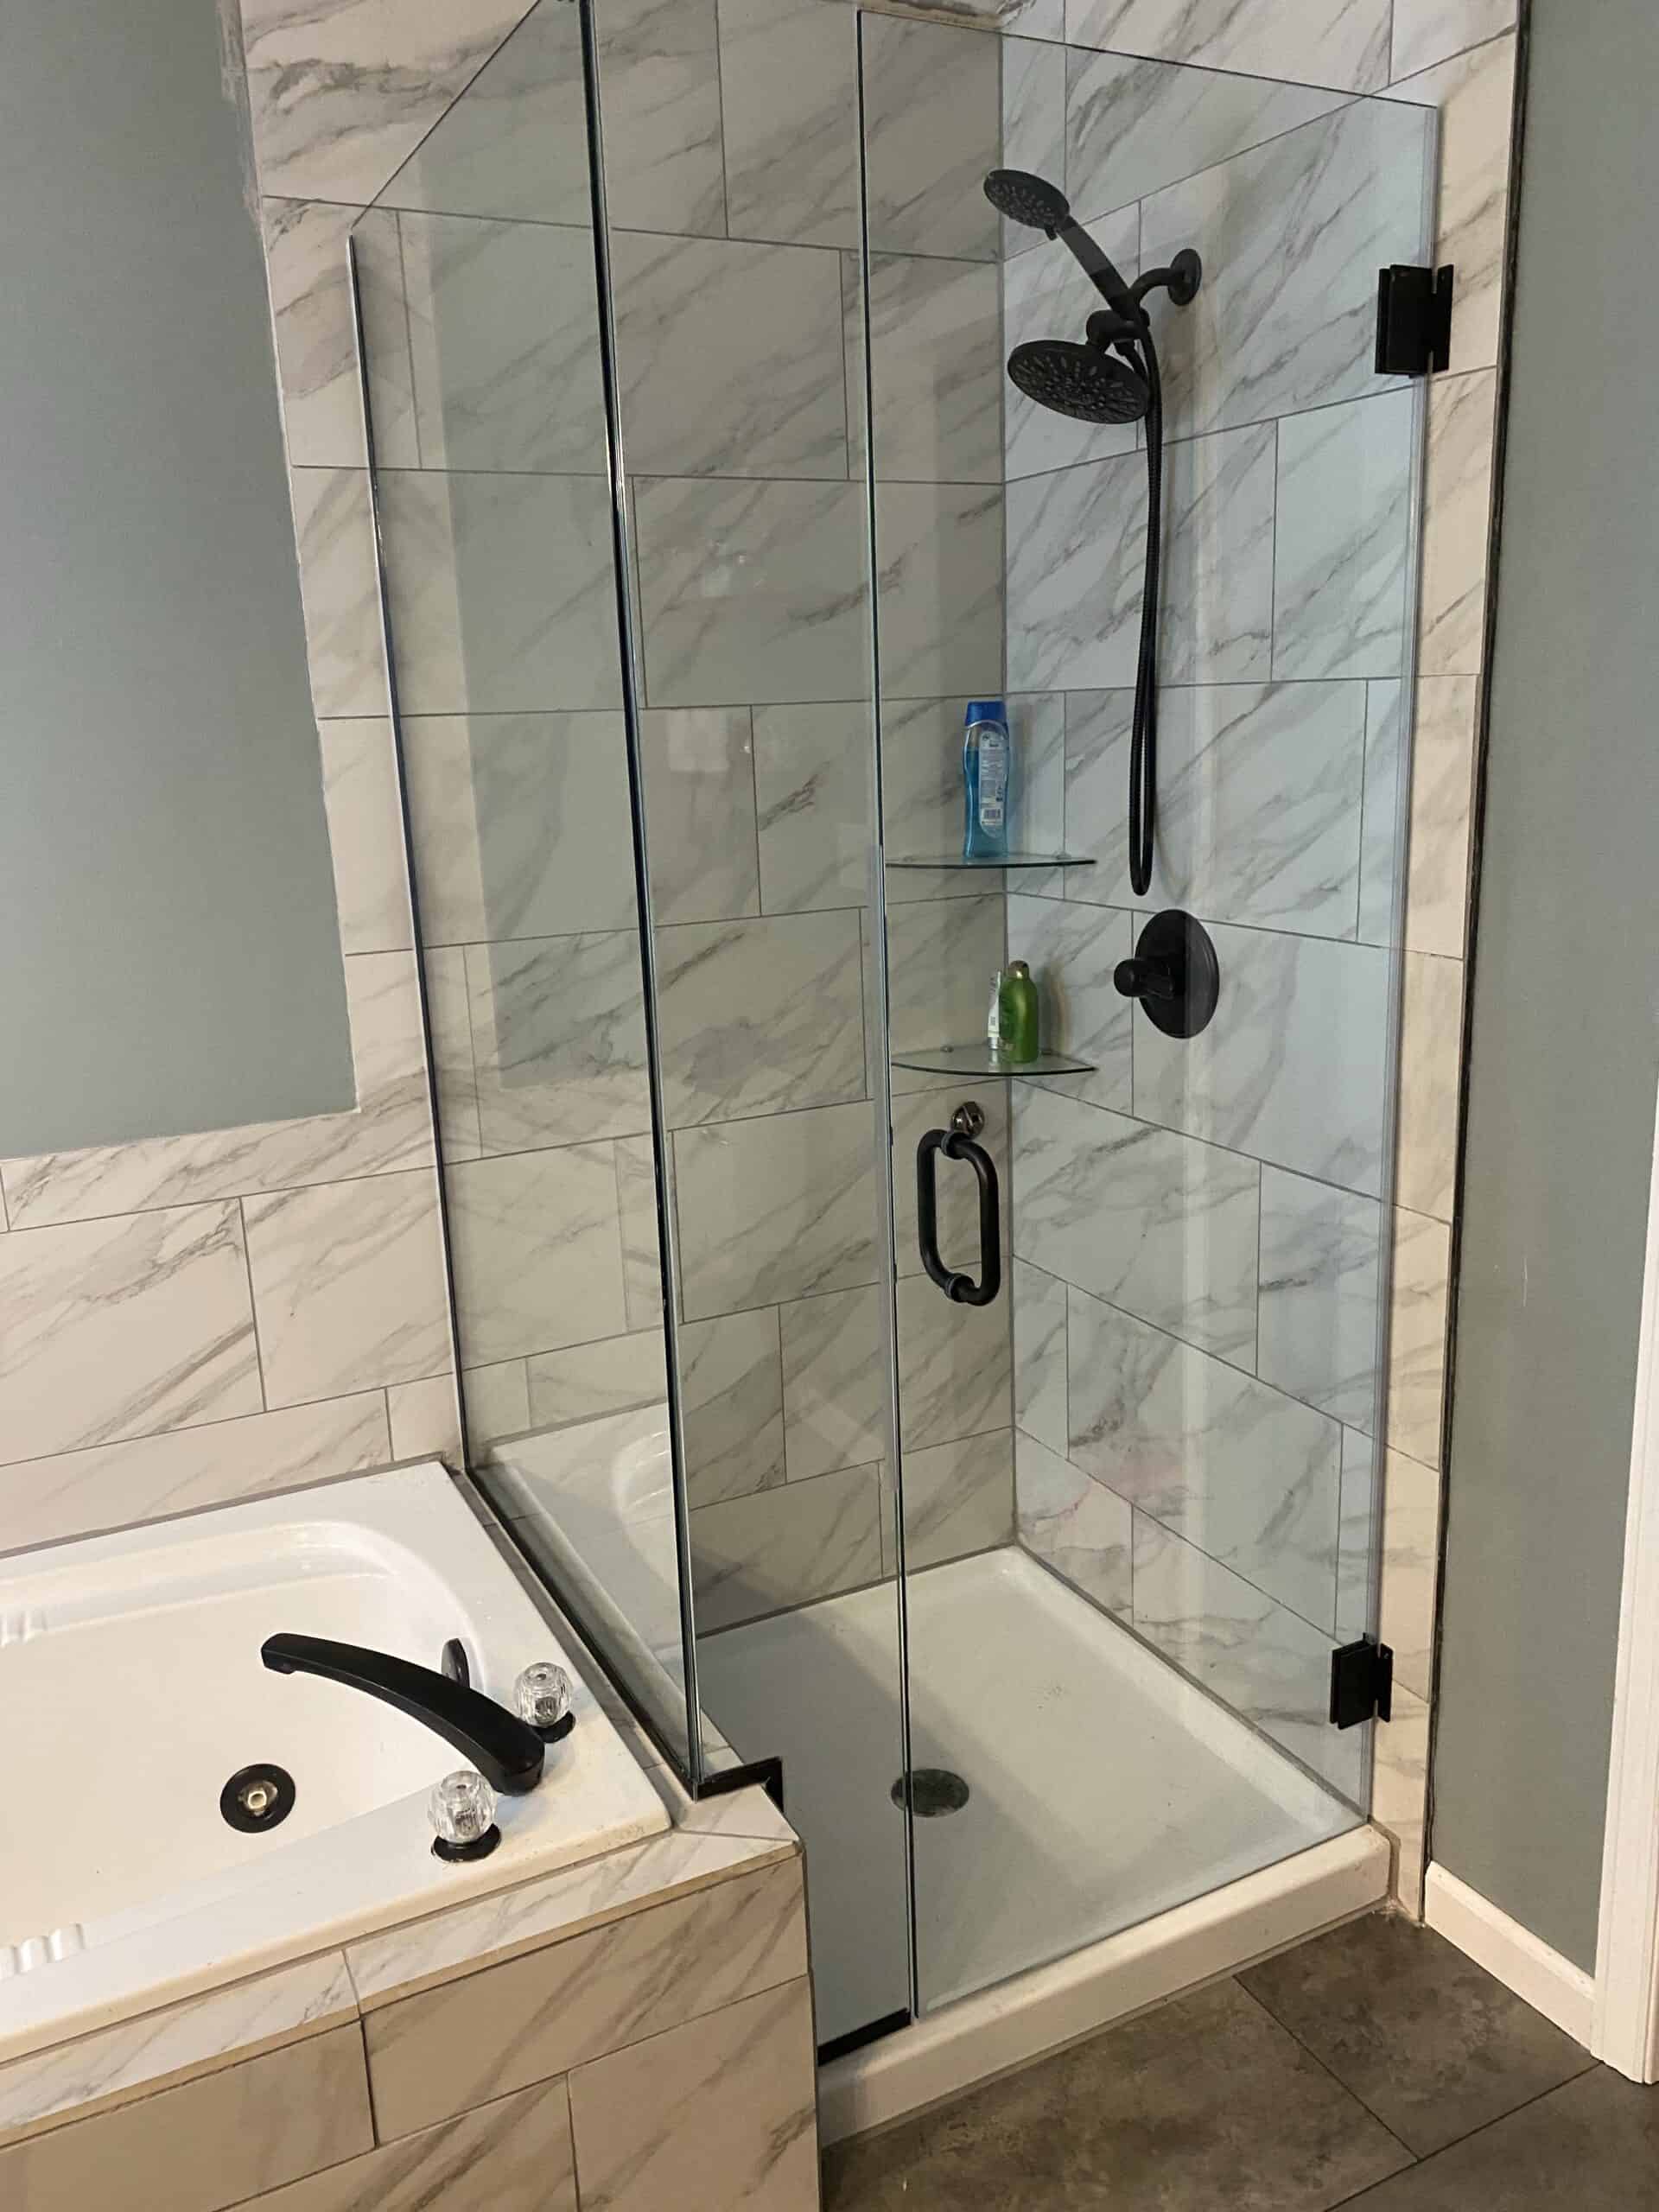 How to install a semi frameless glass shower